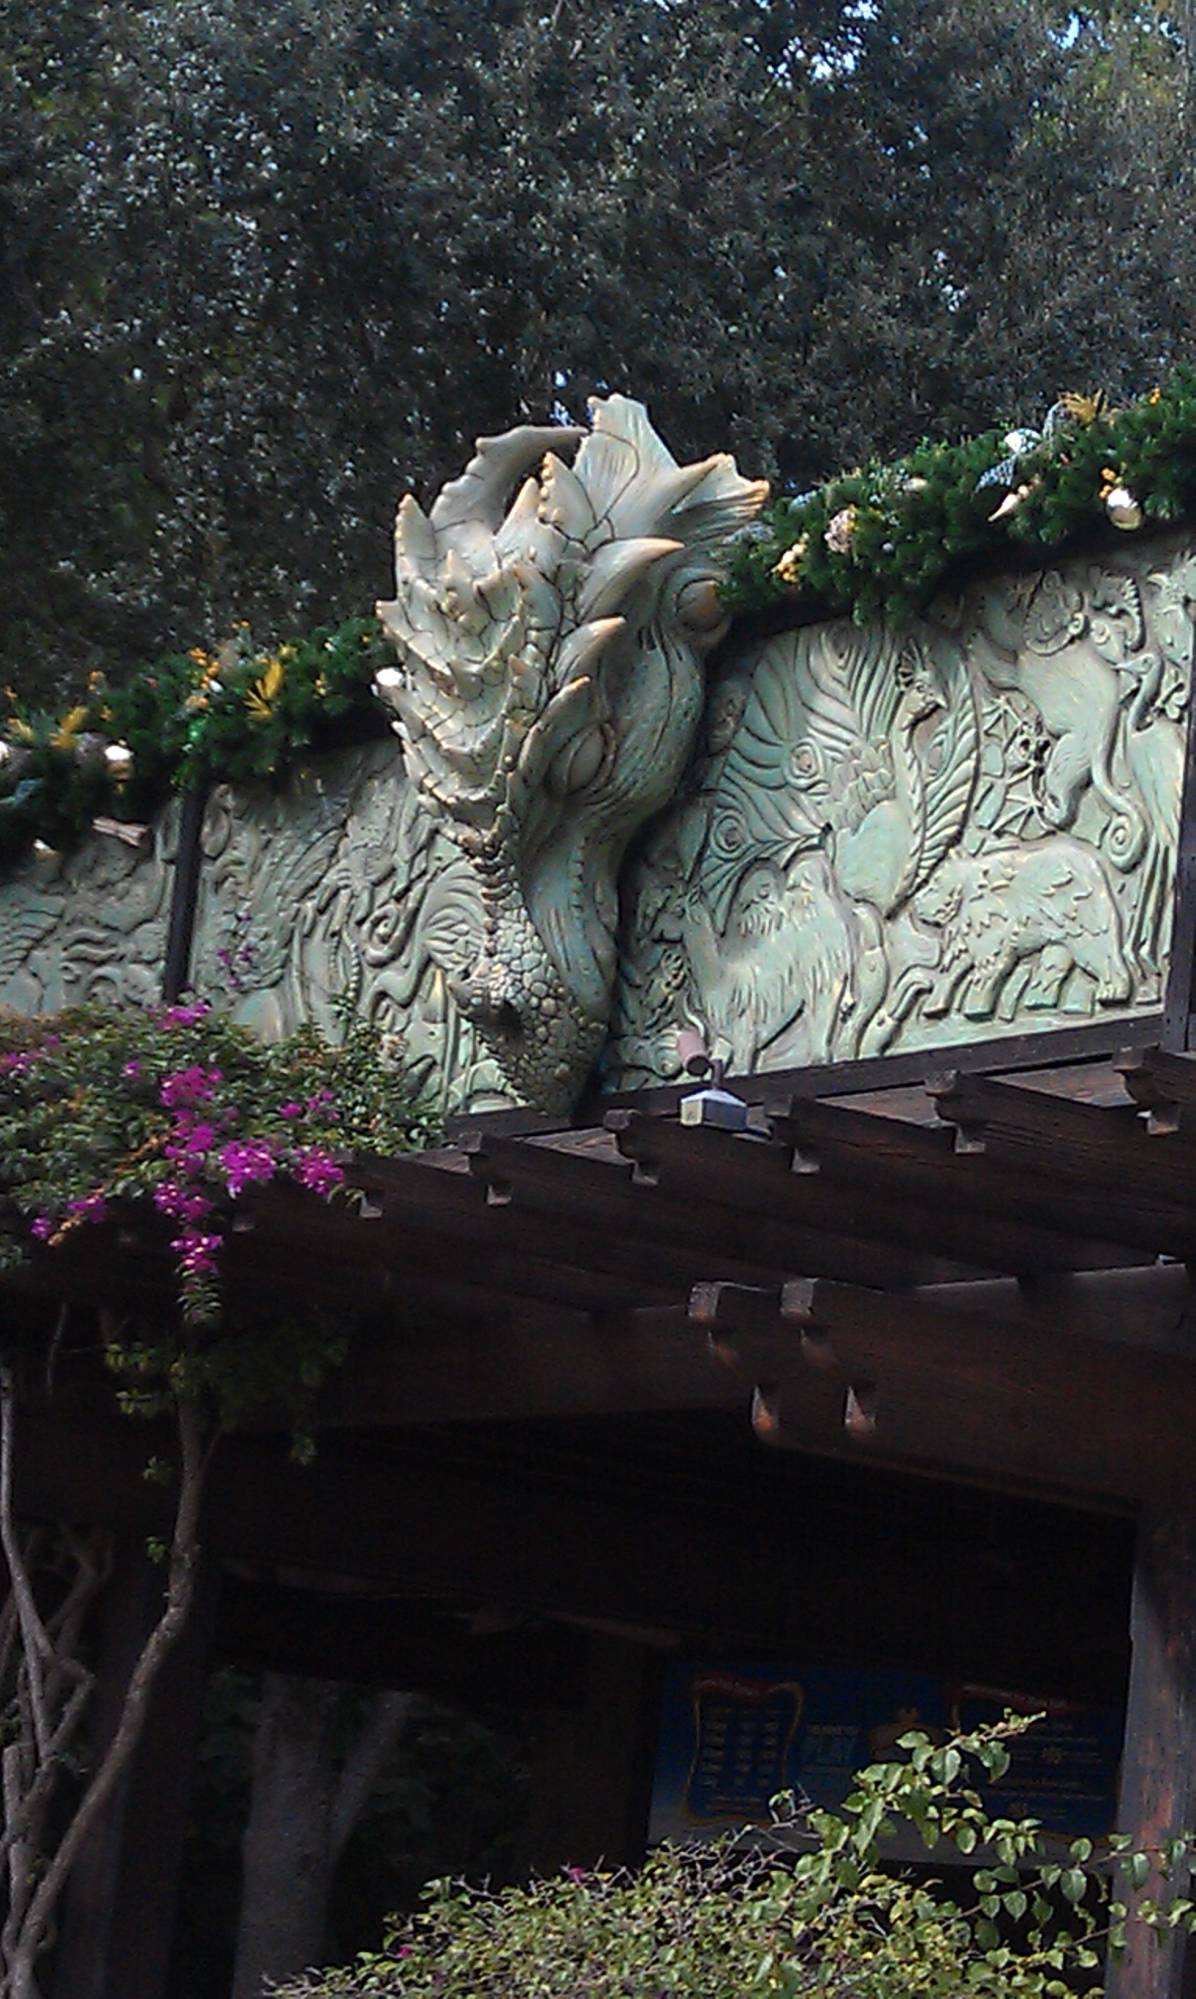 Dragon above the entry gates at Animal Kingdom Park